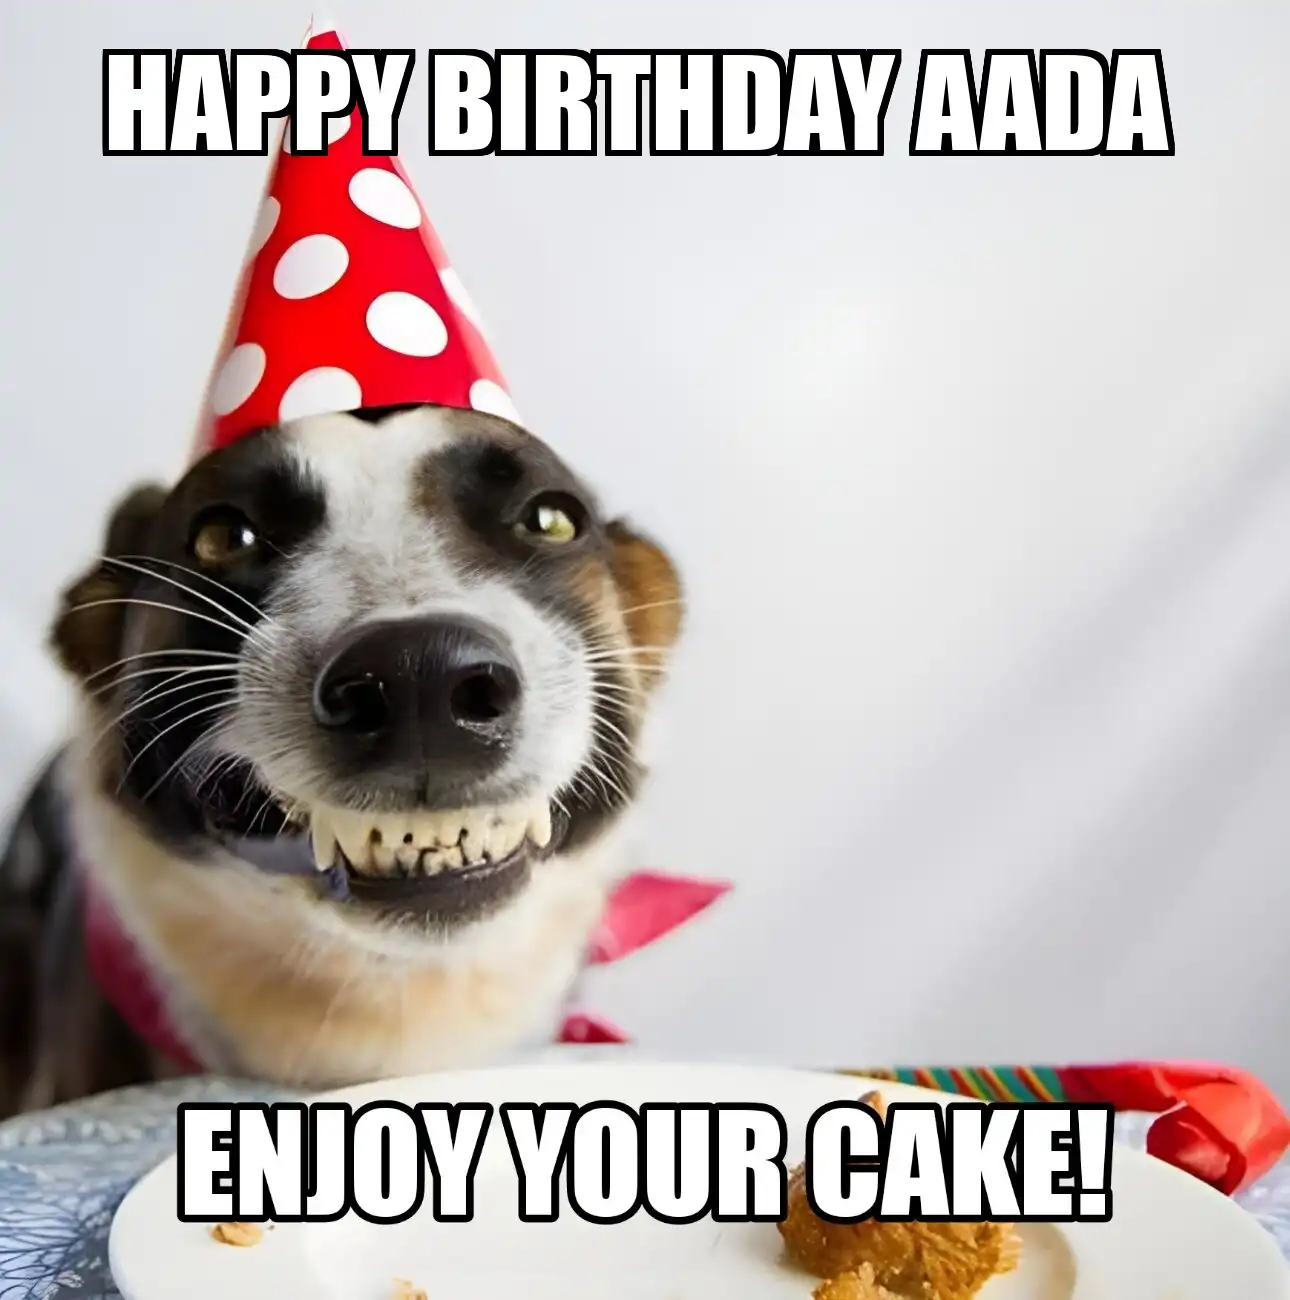 Happy Birthday Aada Enjoy Your Cake Dog Meme